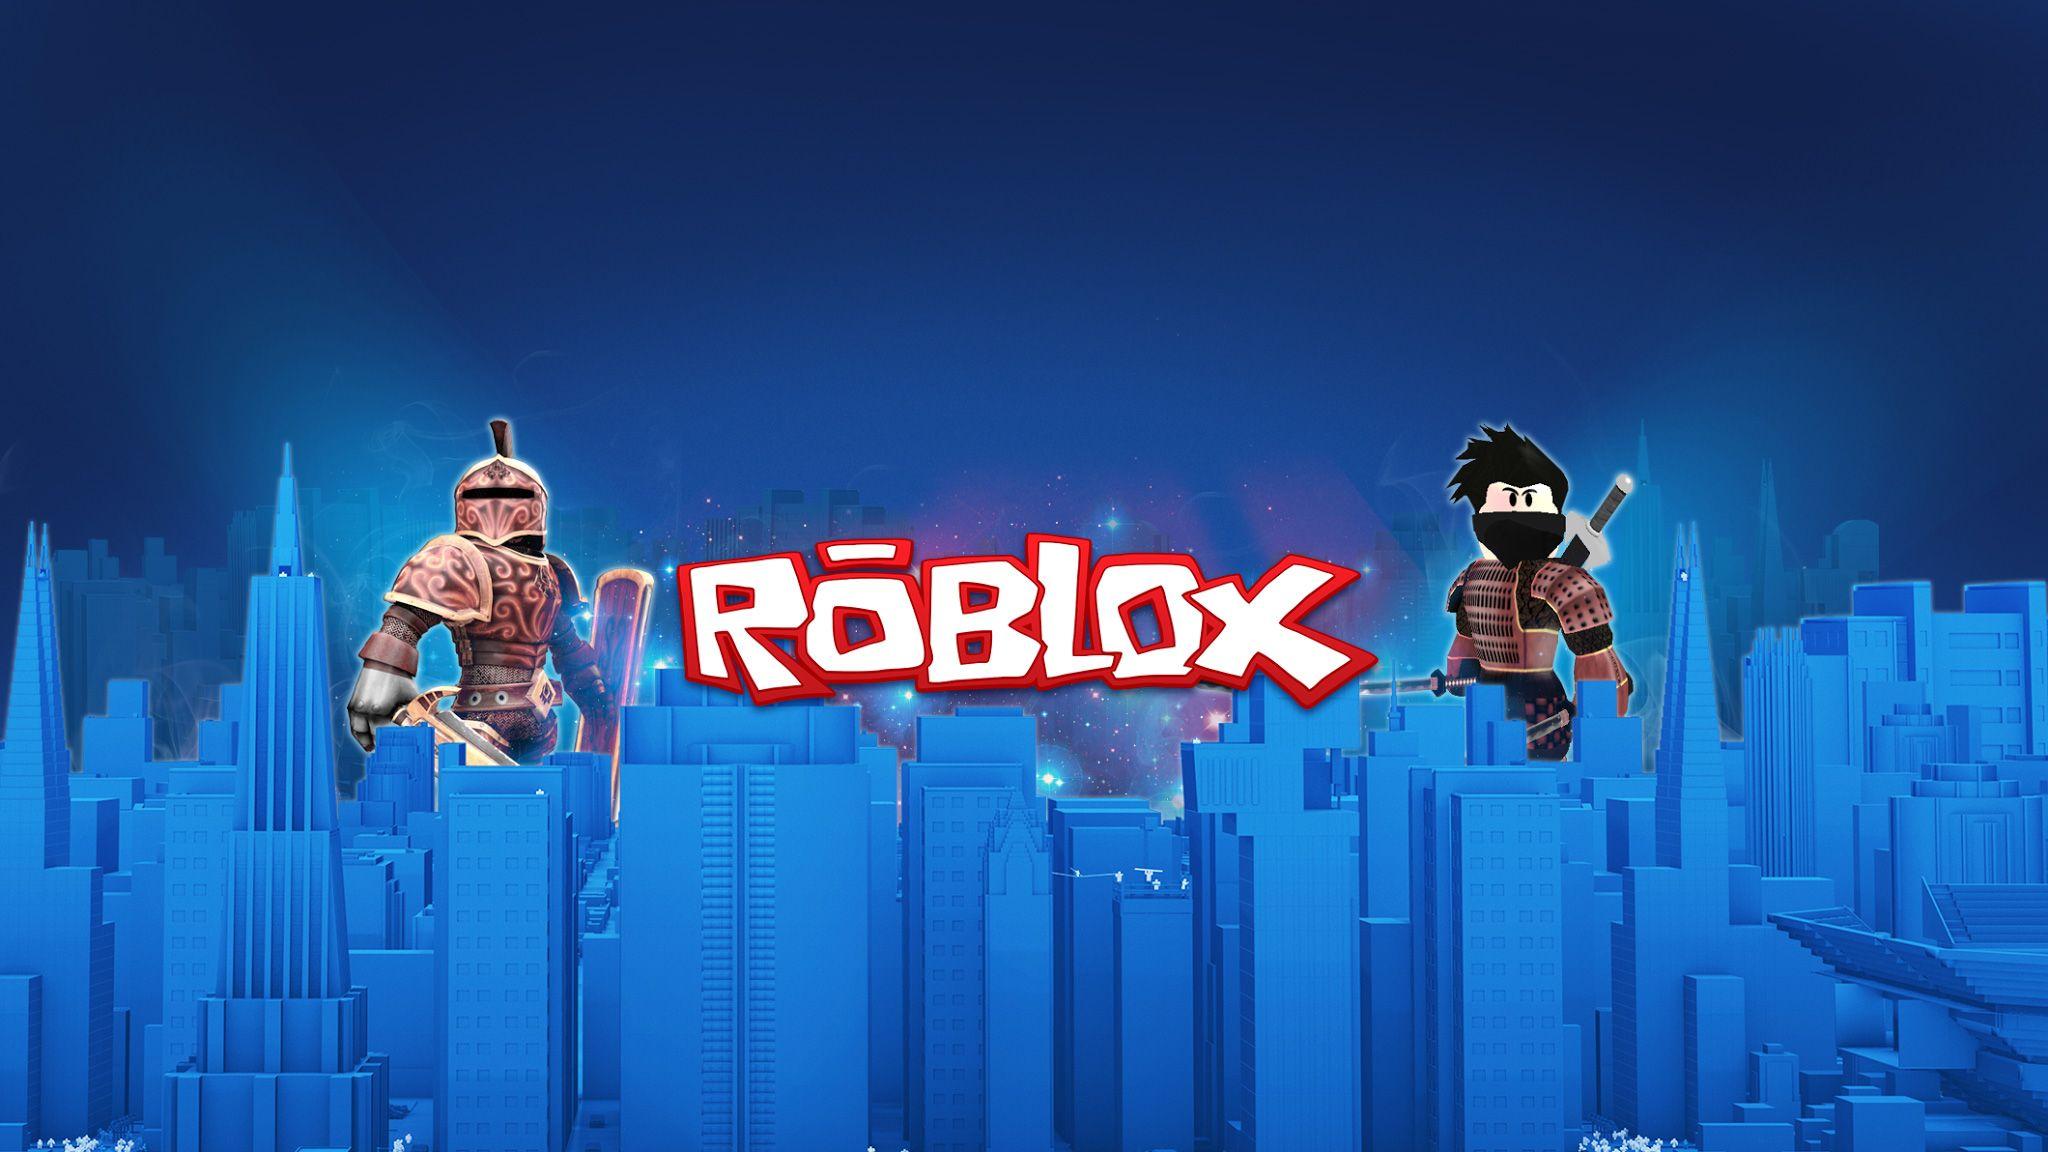 Roblox Desktop Wallpapers Top Free Roblox Desktop Backgrounds Wallpaperaccess - http robux desktoptop